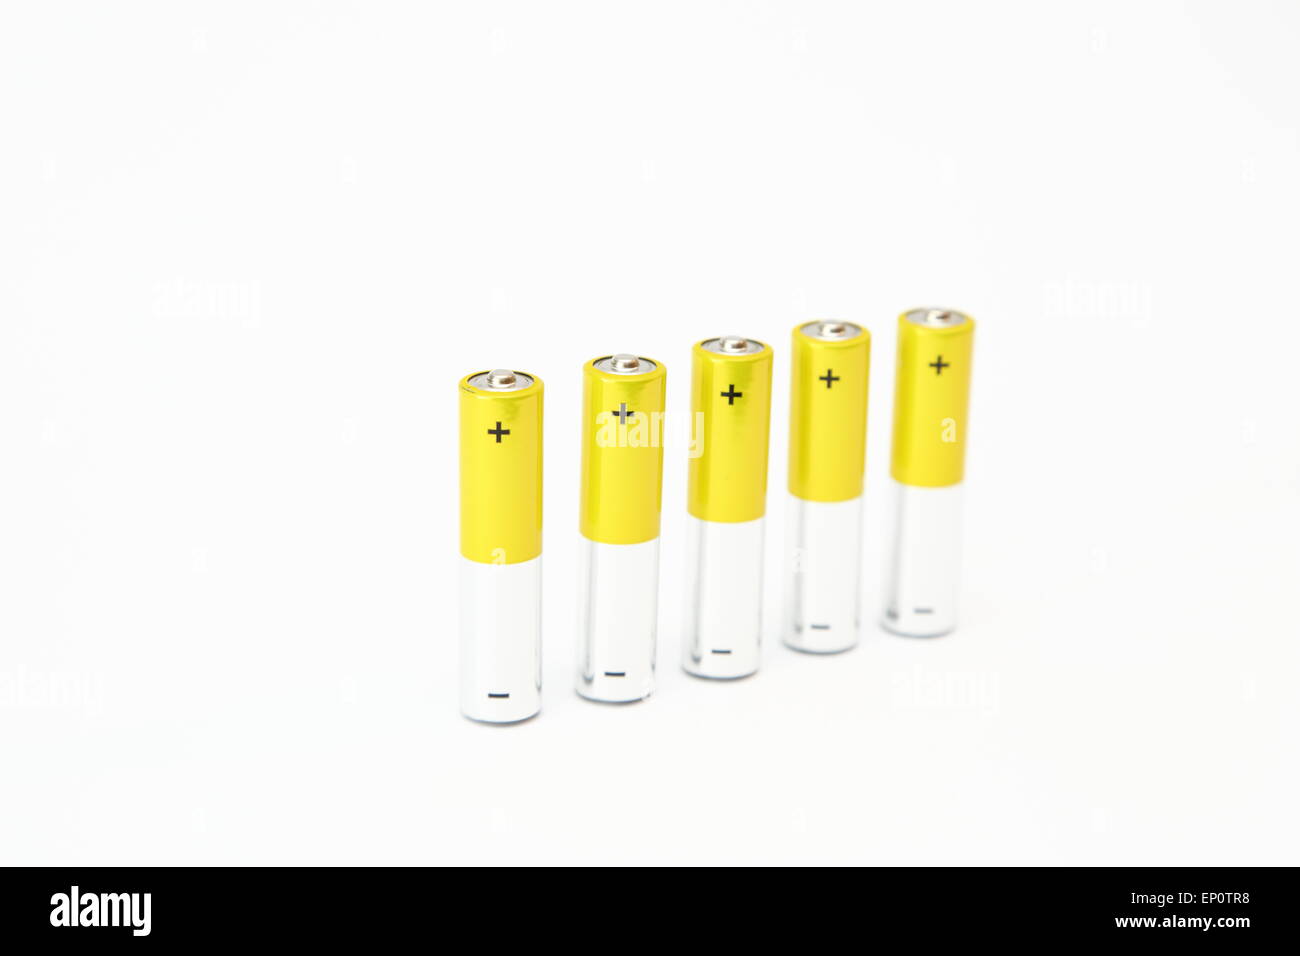 Alkaline batteries on white background. Stock Photo